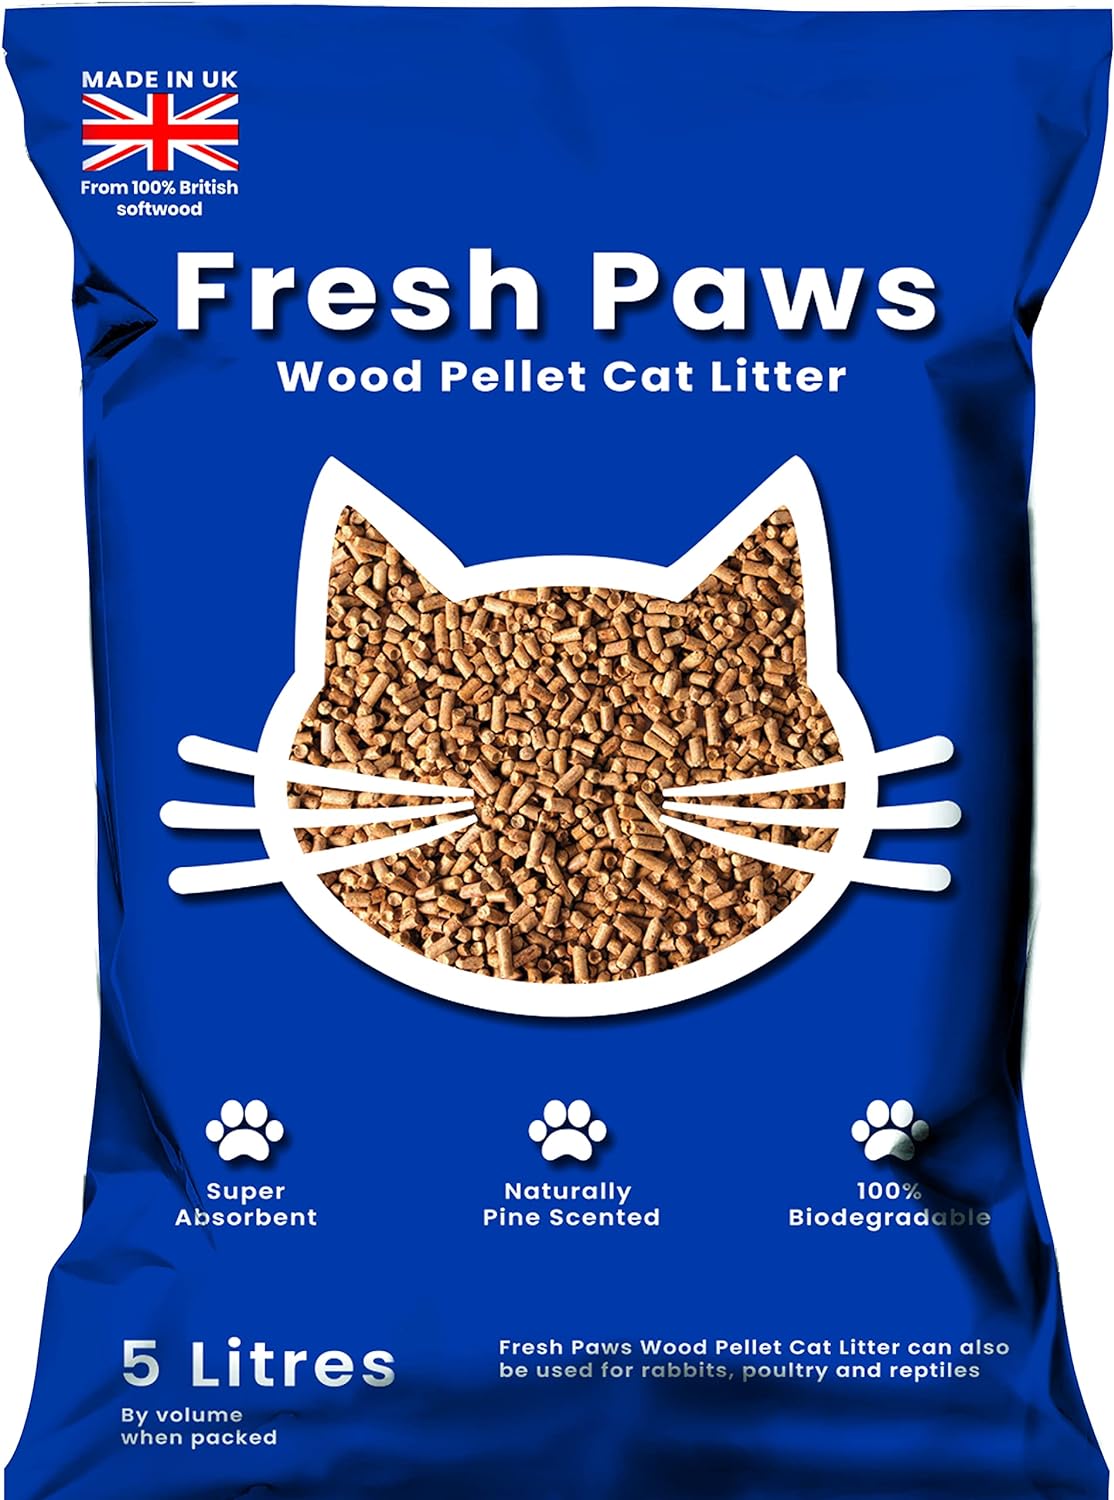 Fresh Paws Premium Wood Pellet Cat Litter